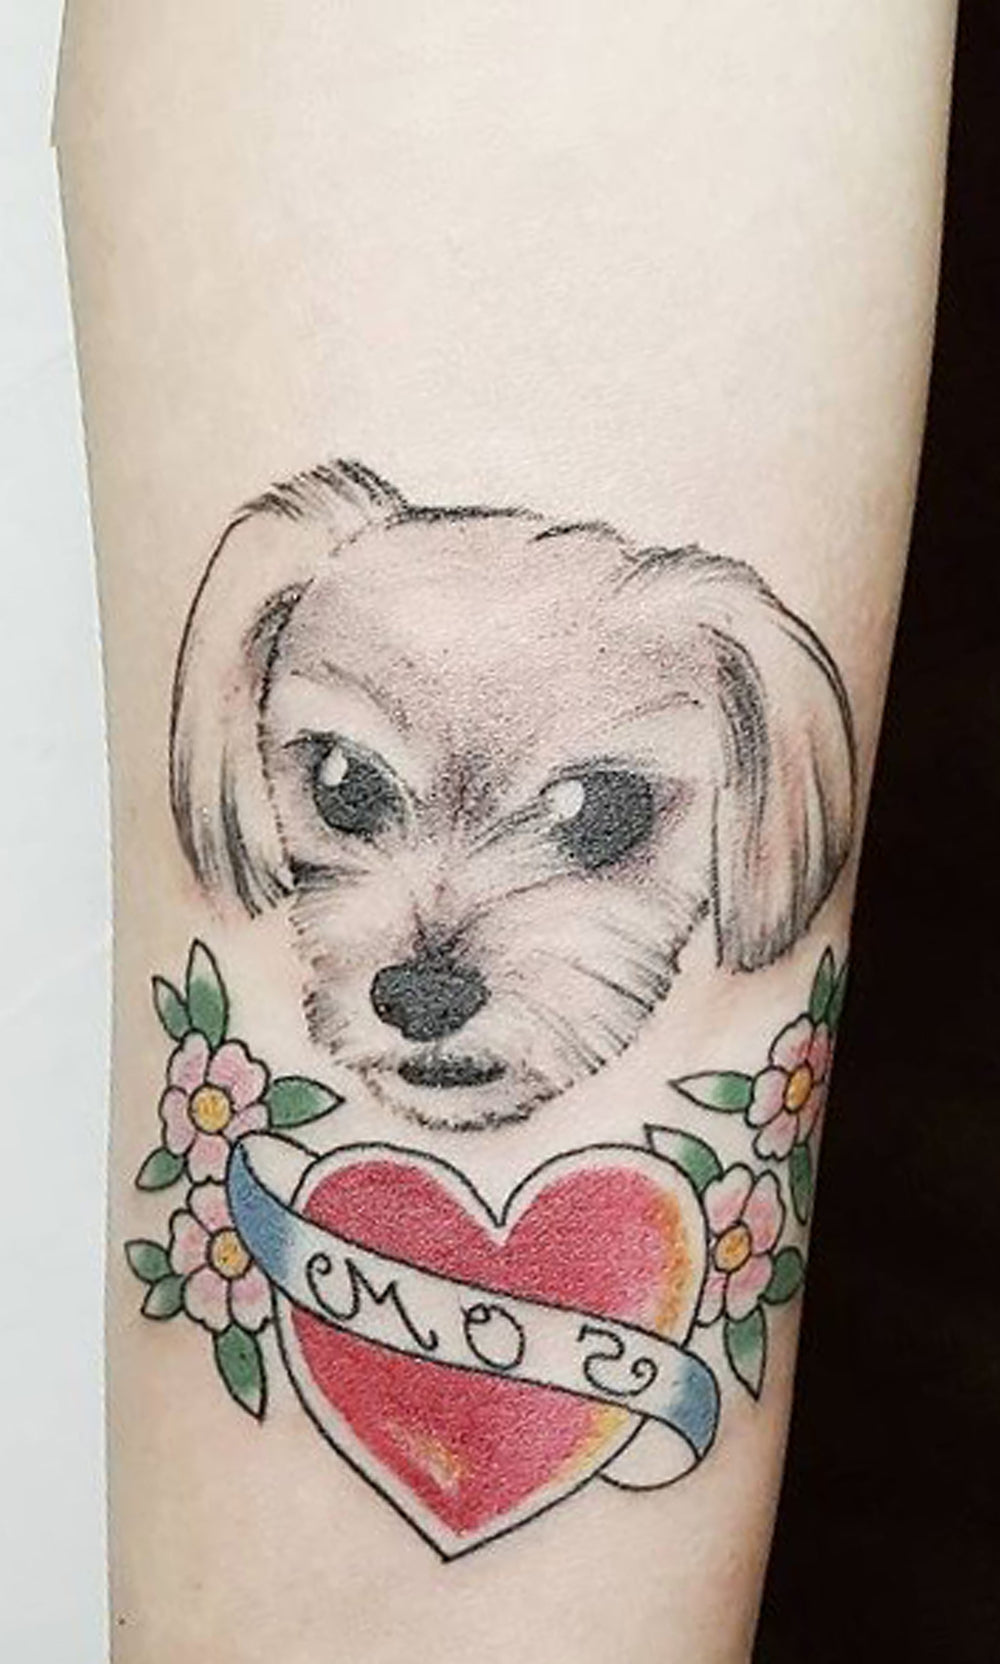 Realistic Memorial Dog Name Heart Flower Arm Sleeve Tattoo Ideas for Women -  tatuaje conmemorativo del brazo del perro - www.MyBodiArt.com